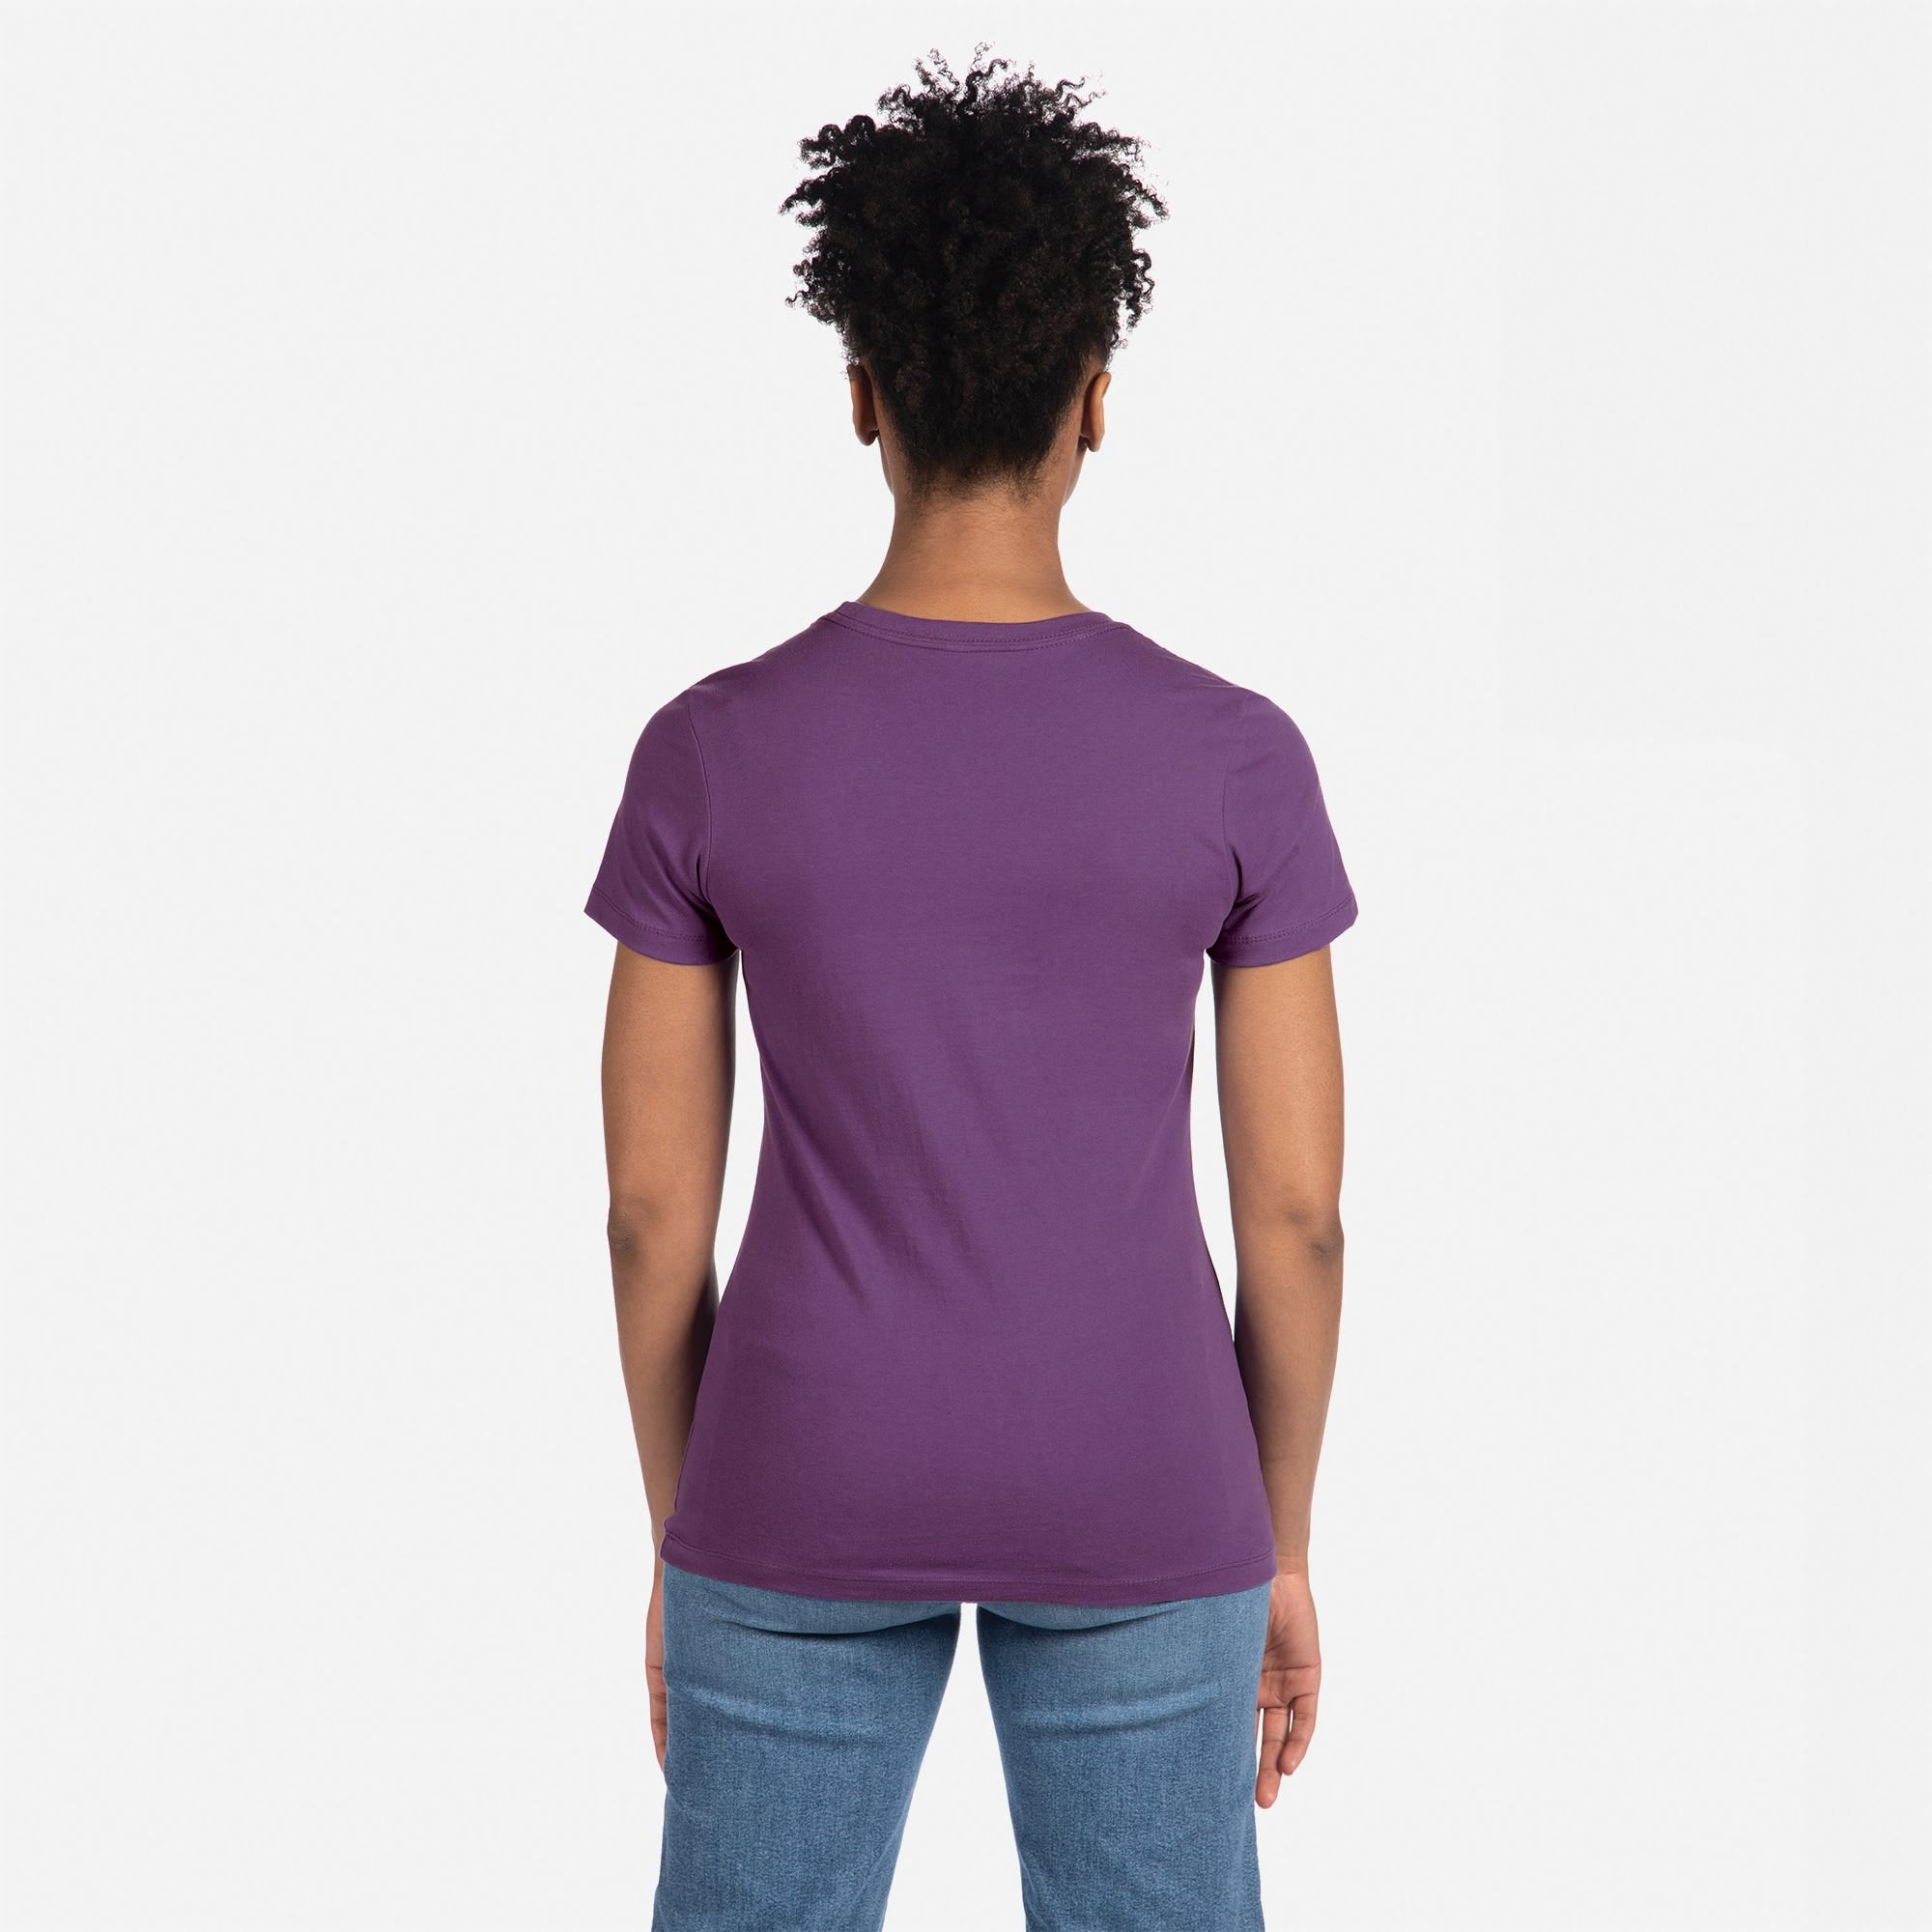 Cotton Boyfriend T-Shirt Purple Rush 3900 Next Level Apparel Back View